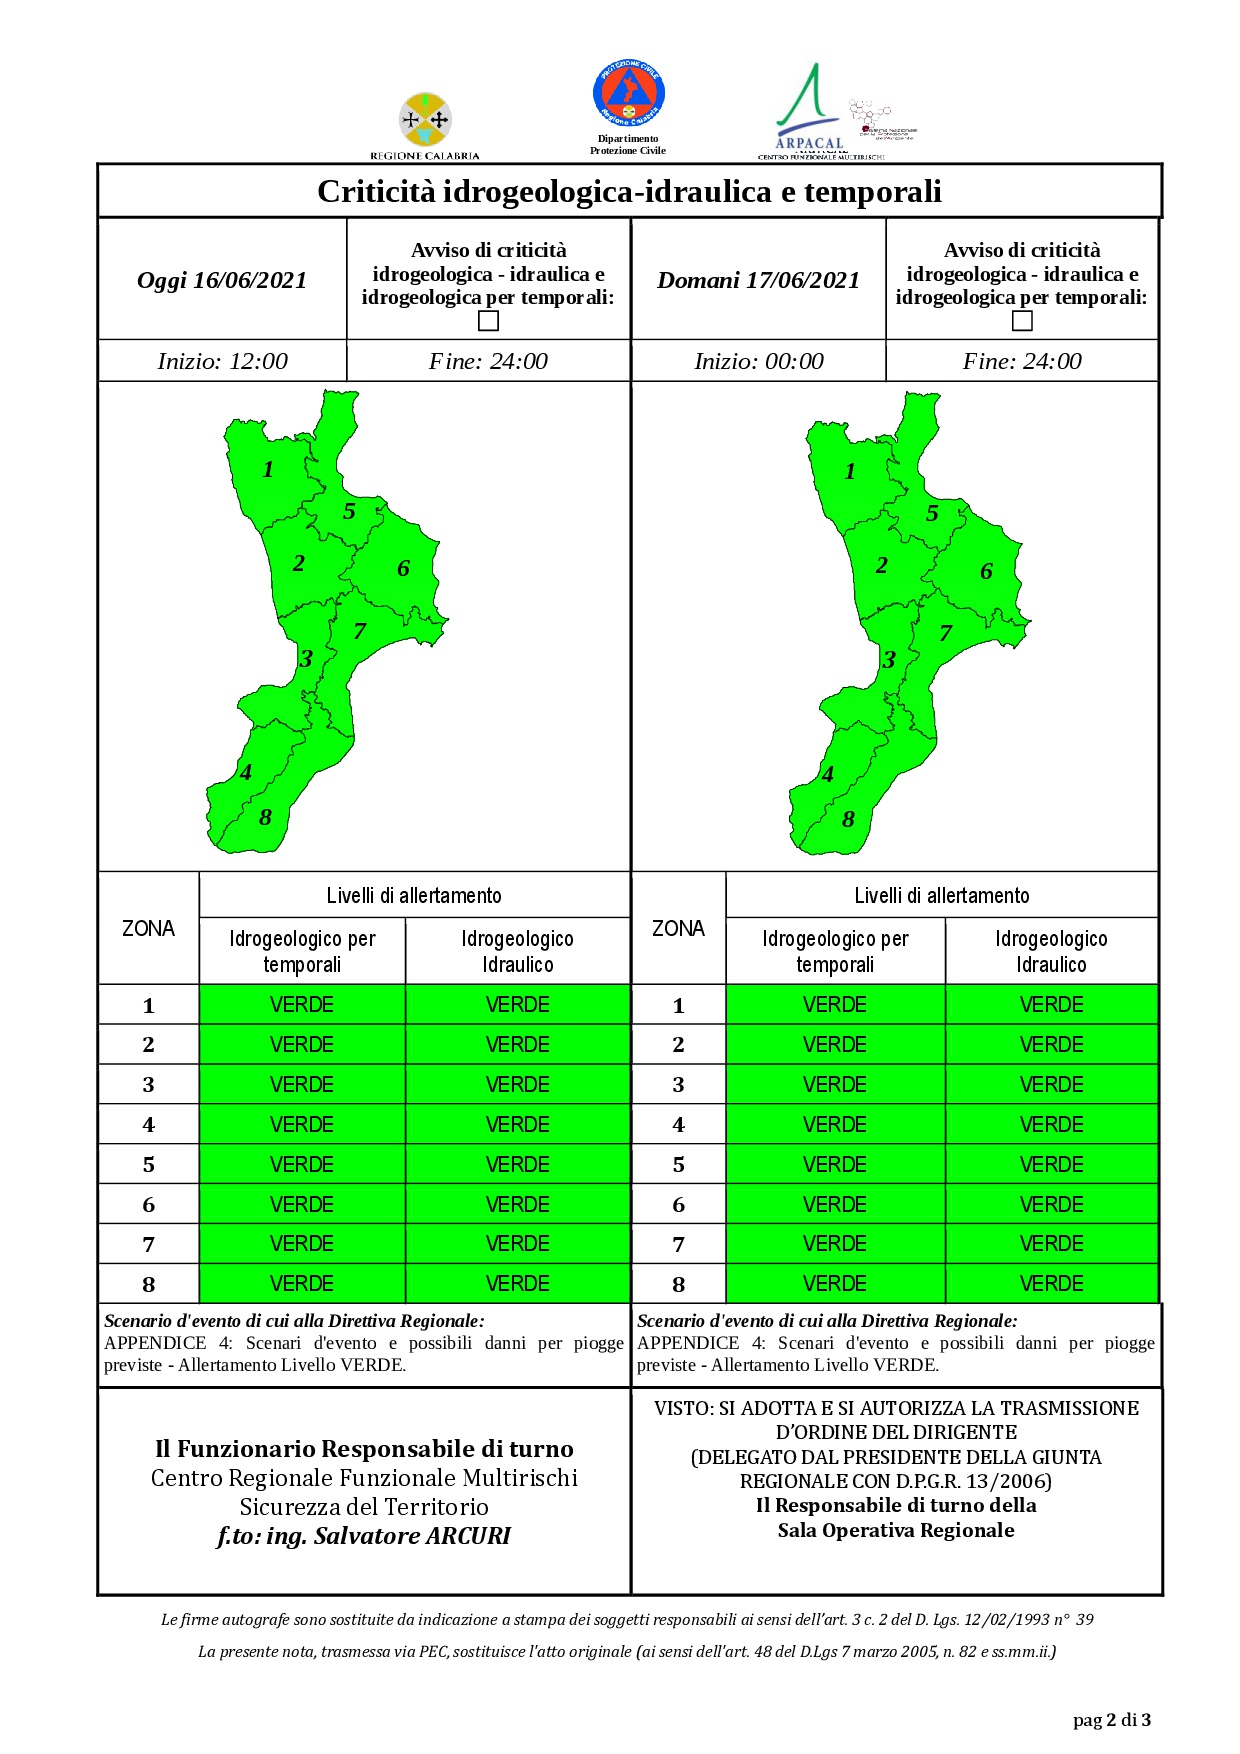 Criticità idrogeologica-idraulica e temporali in Calabria 16-06-2021